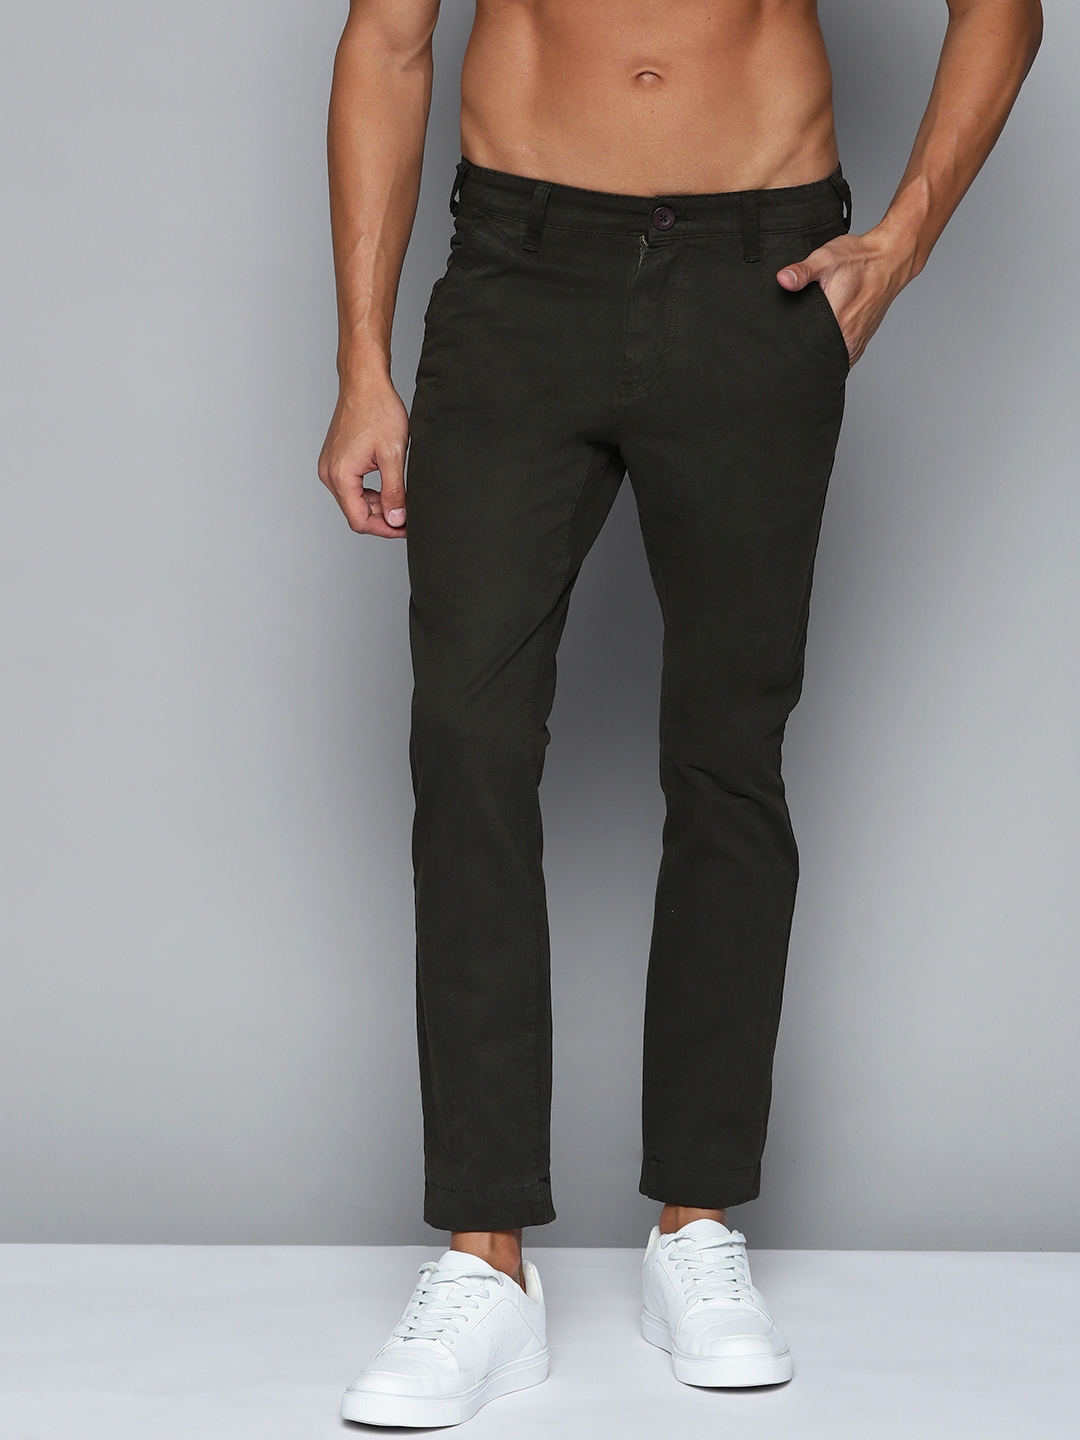 Buy Men Charcoal Grey Slim Fit Solid Formal Trousers online  Looksgudin